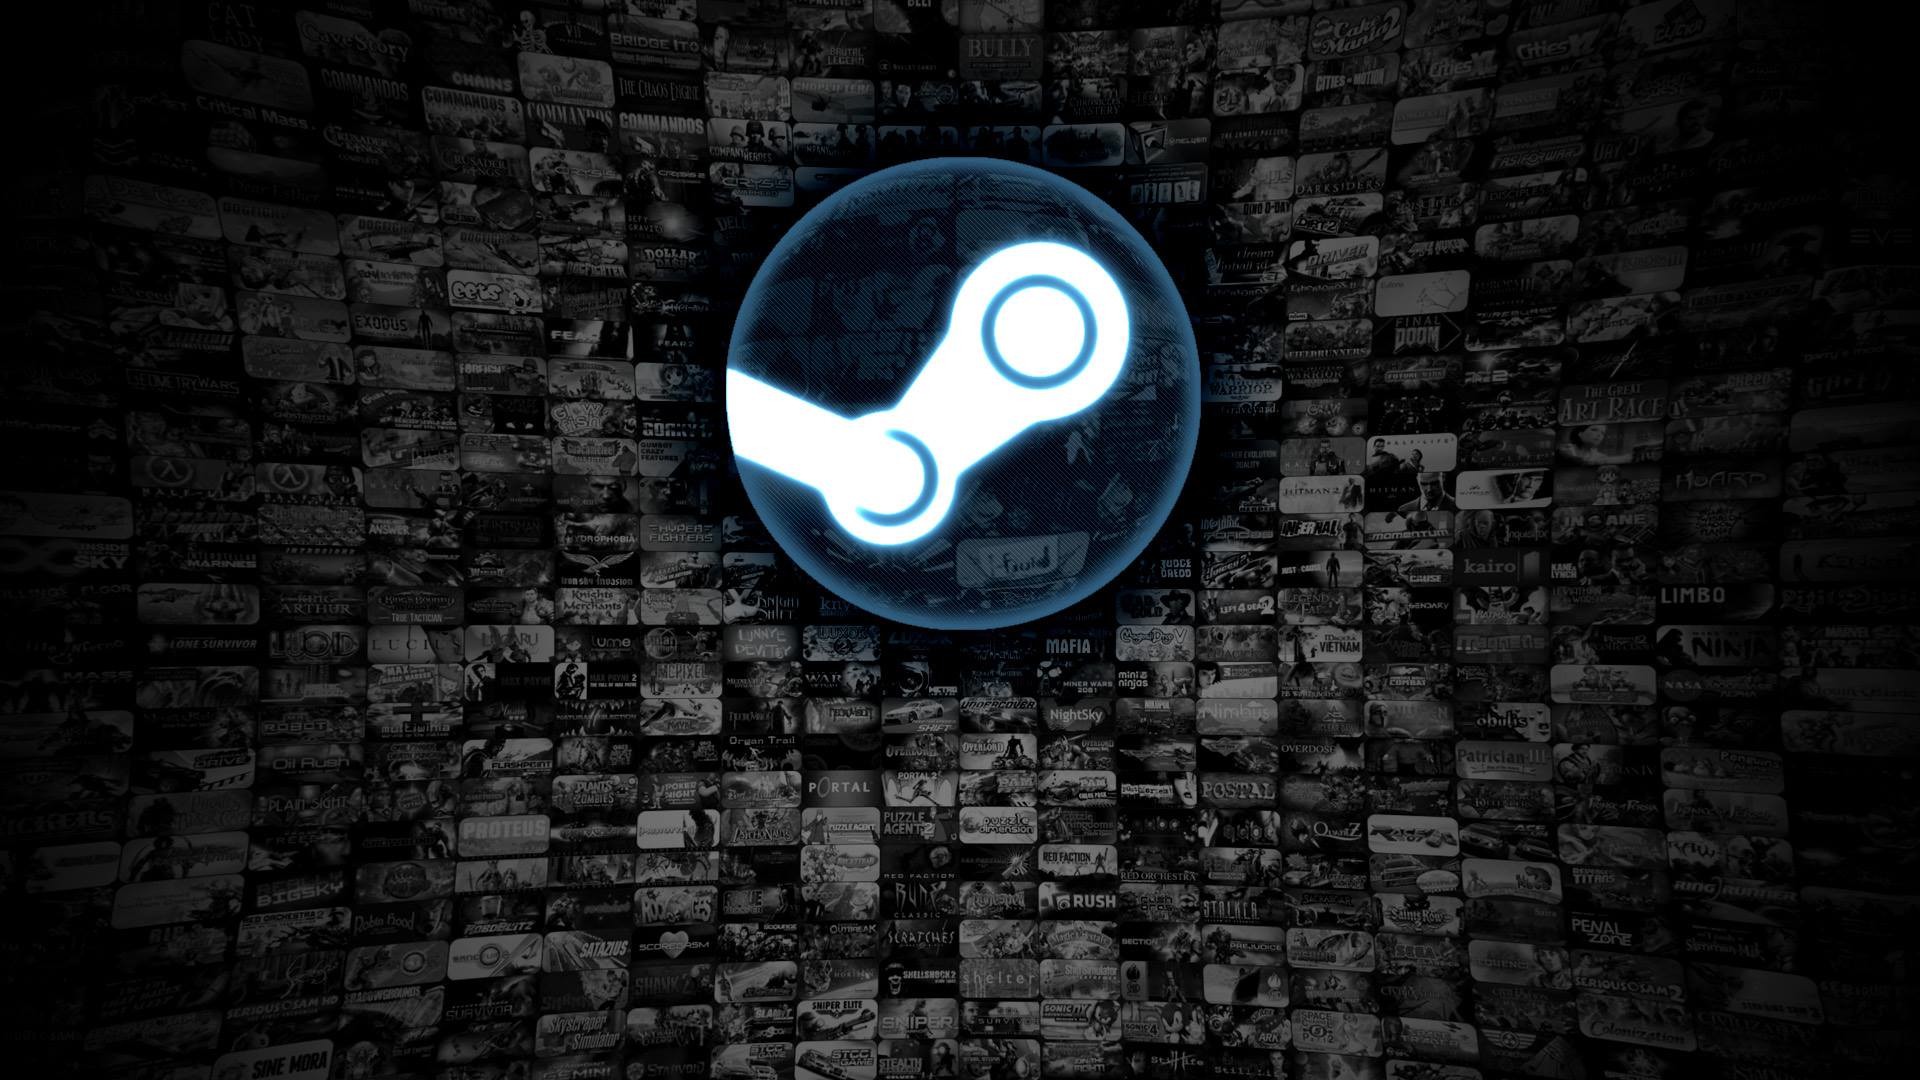 Steam Valve Corporation Team Fortress 2 Left 4 Dead Half-Life 2 Portal 2  games wallpaper | 1920x1200 | 188757 | WallpaperUP